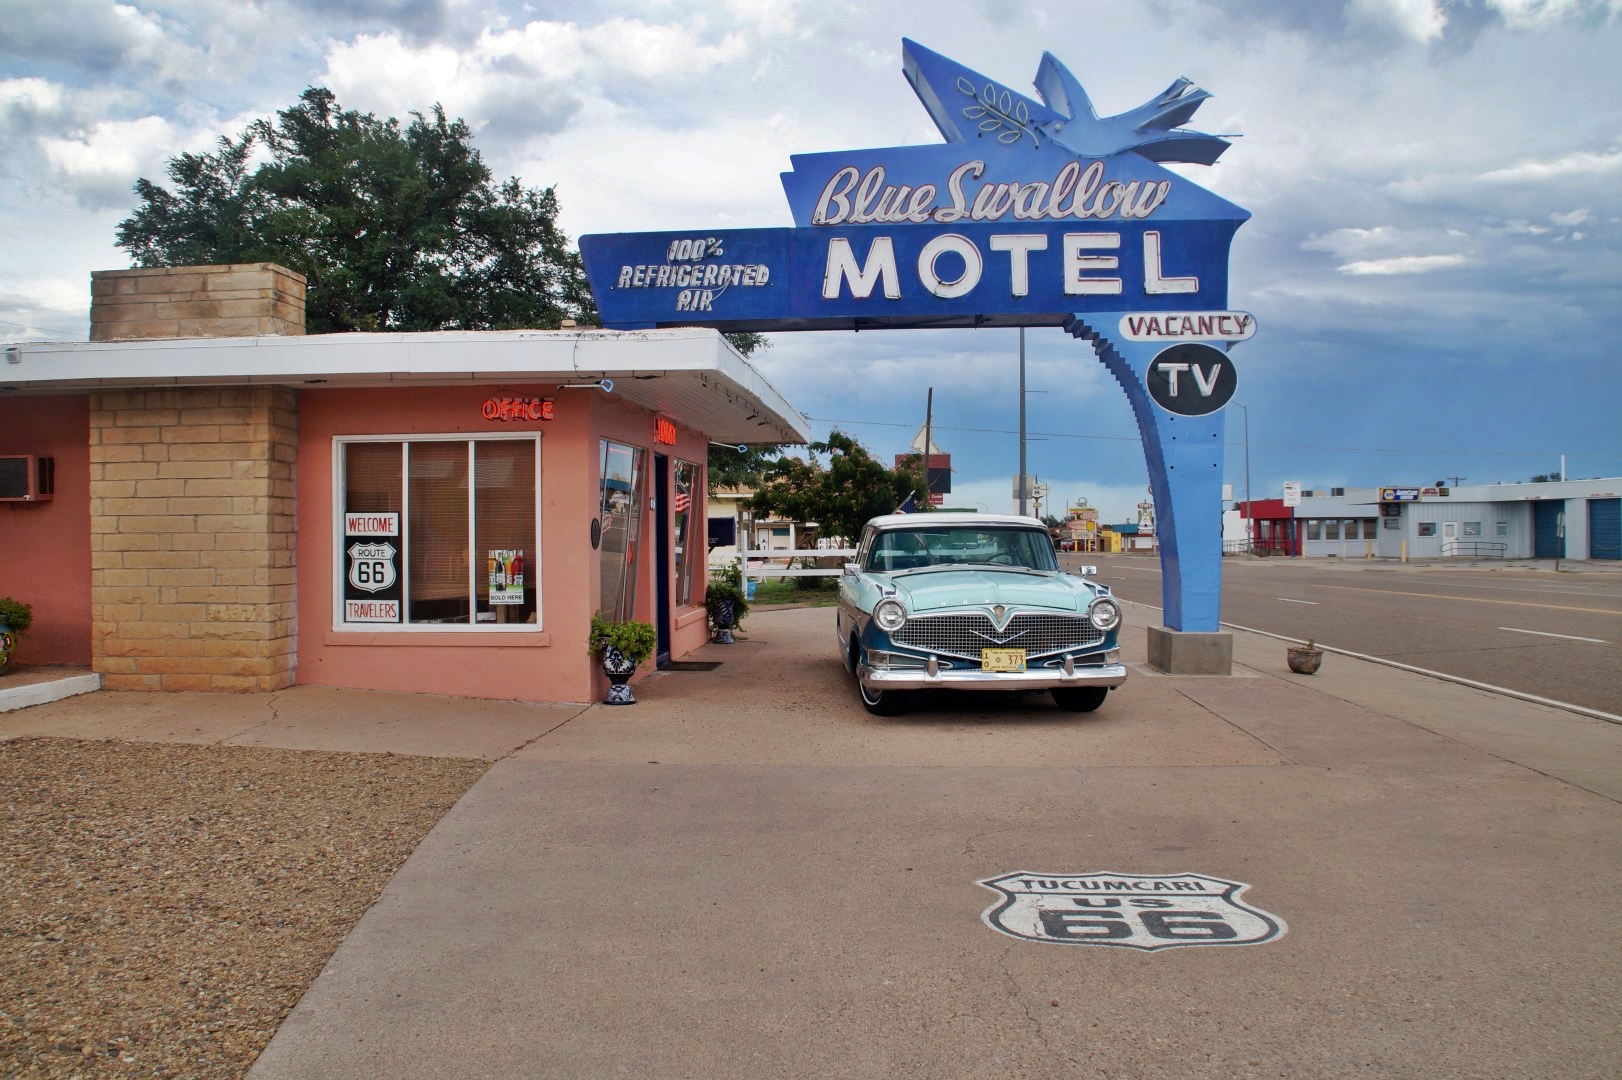 Blue Swallow Motel in Tucumcari.